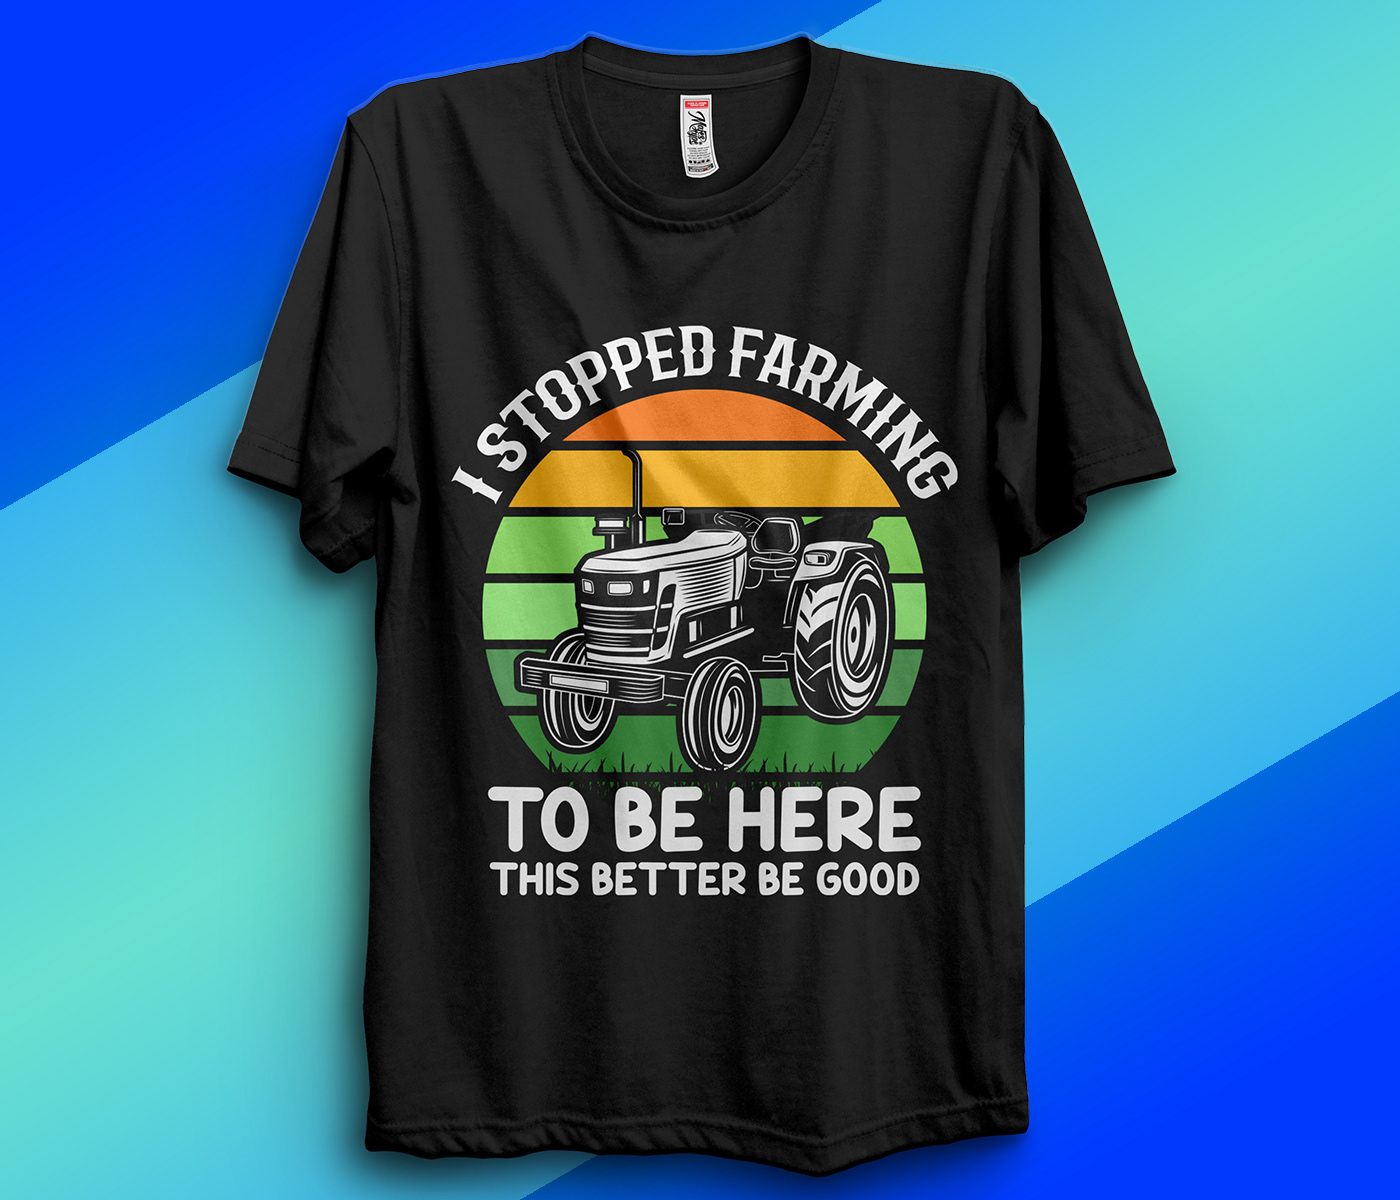 Farming T-shirt Design